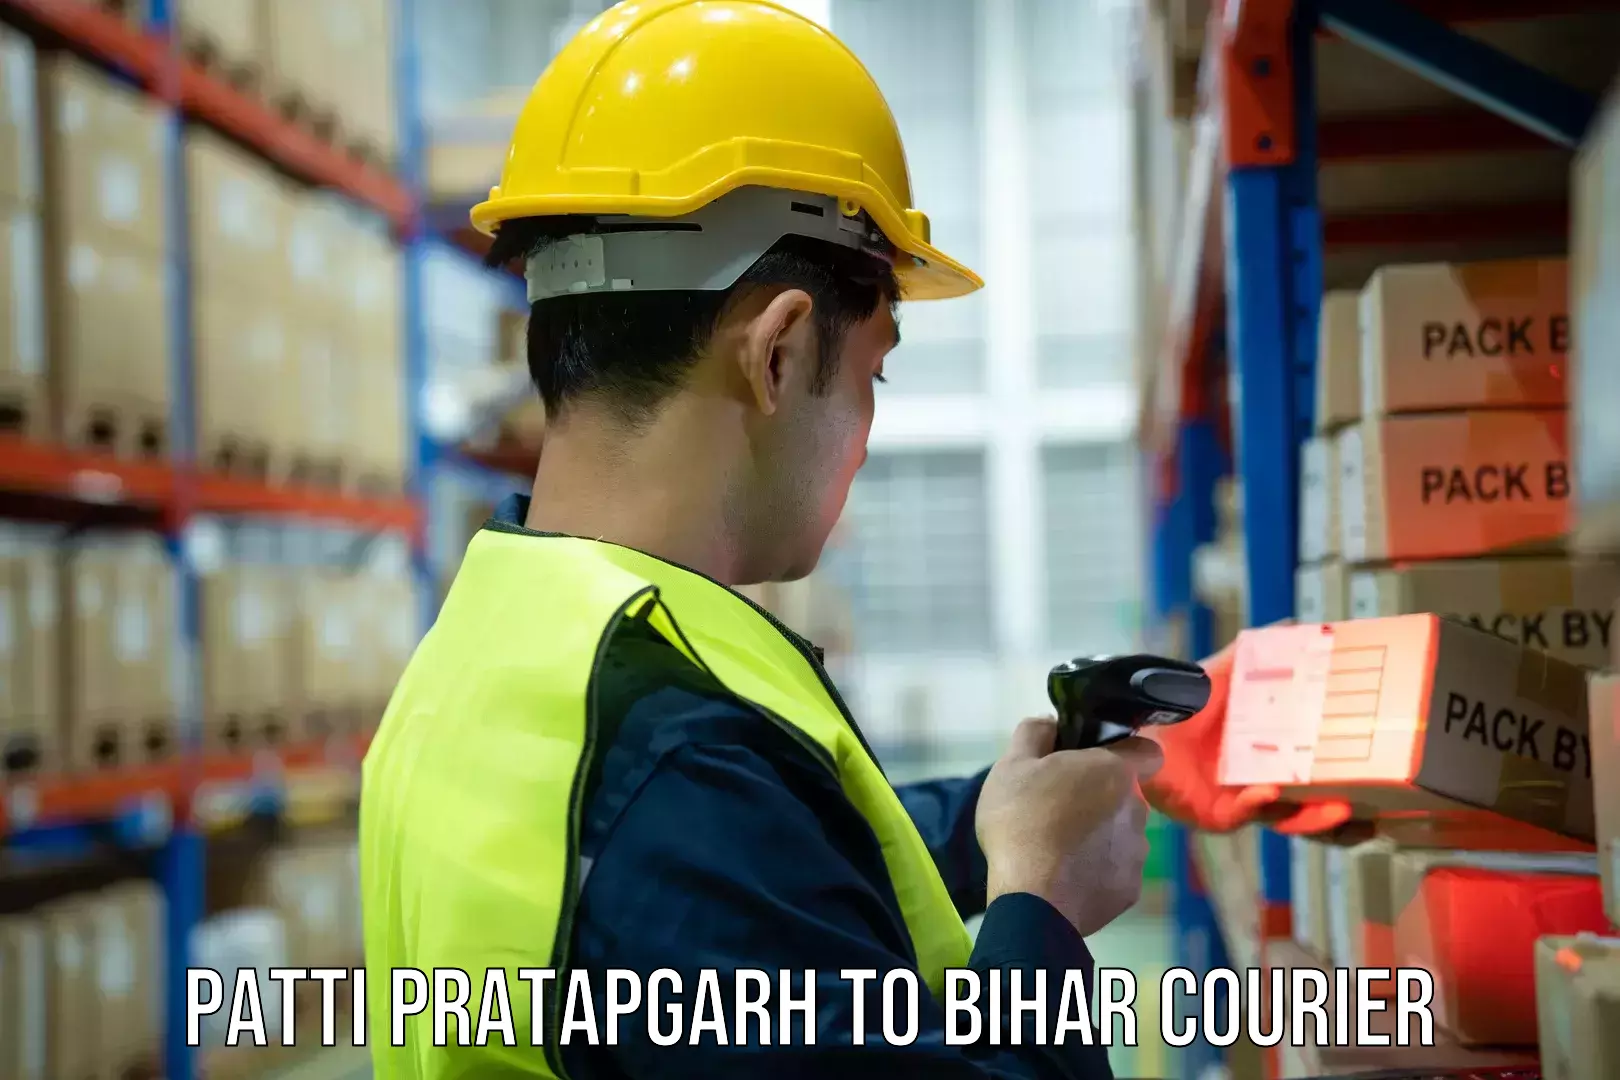 Large-scale shipping solutions Patti Pratapgarh to Madhepura